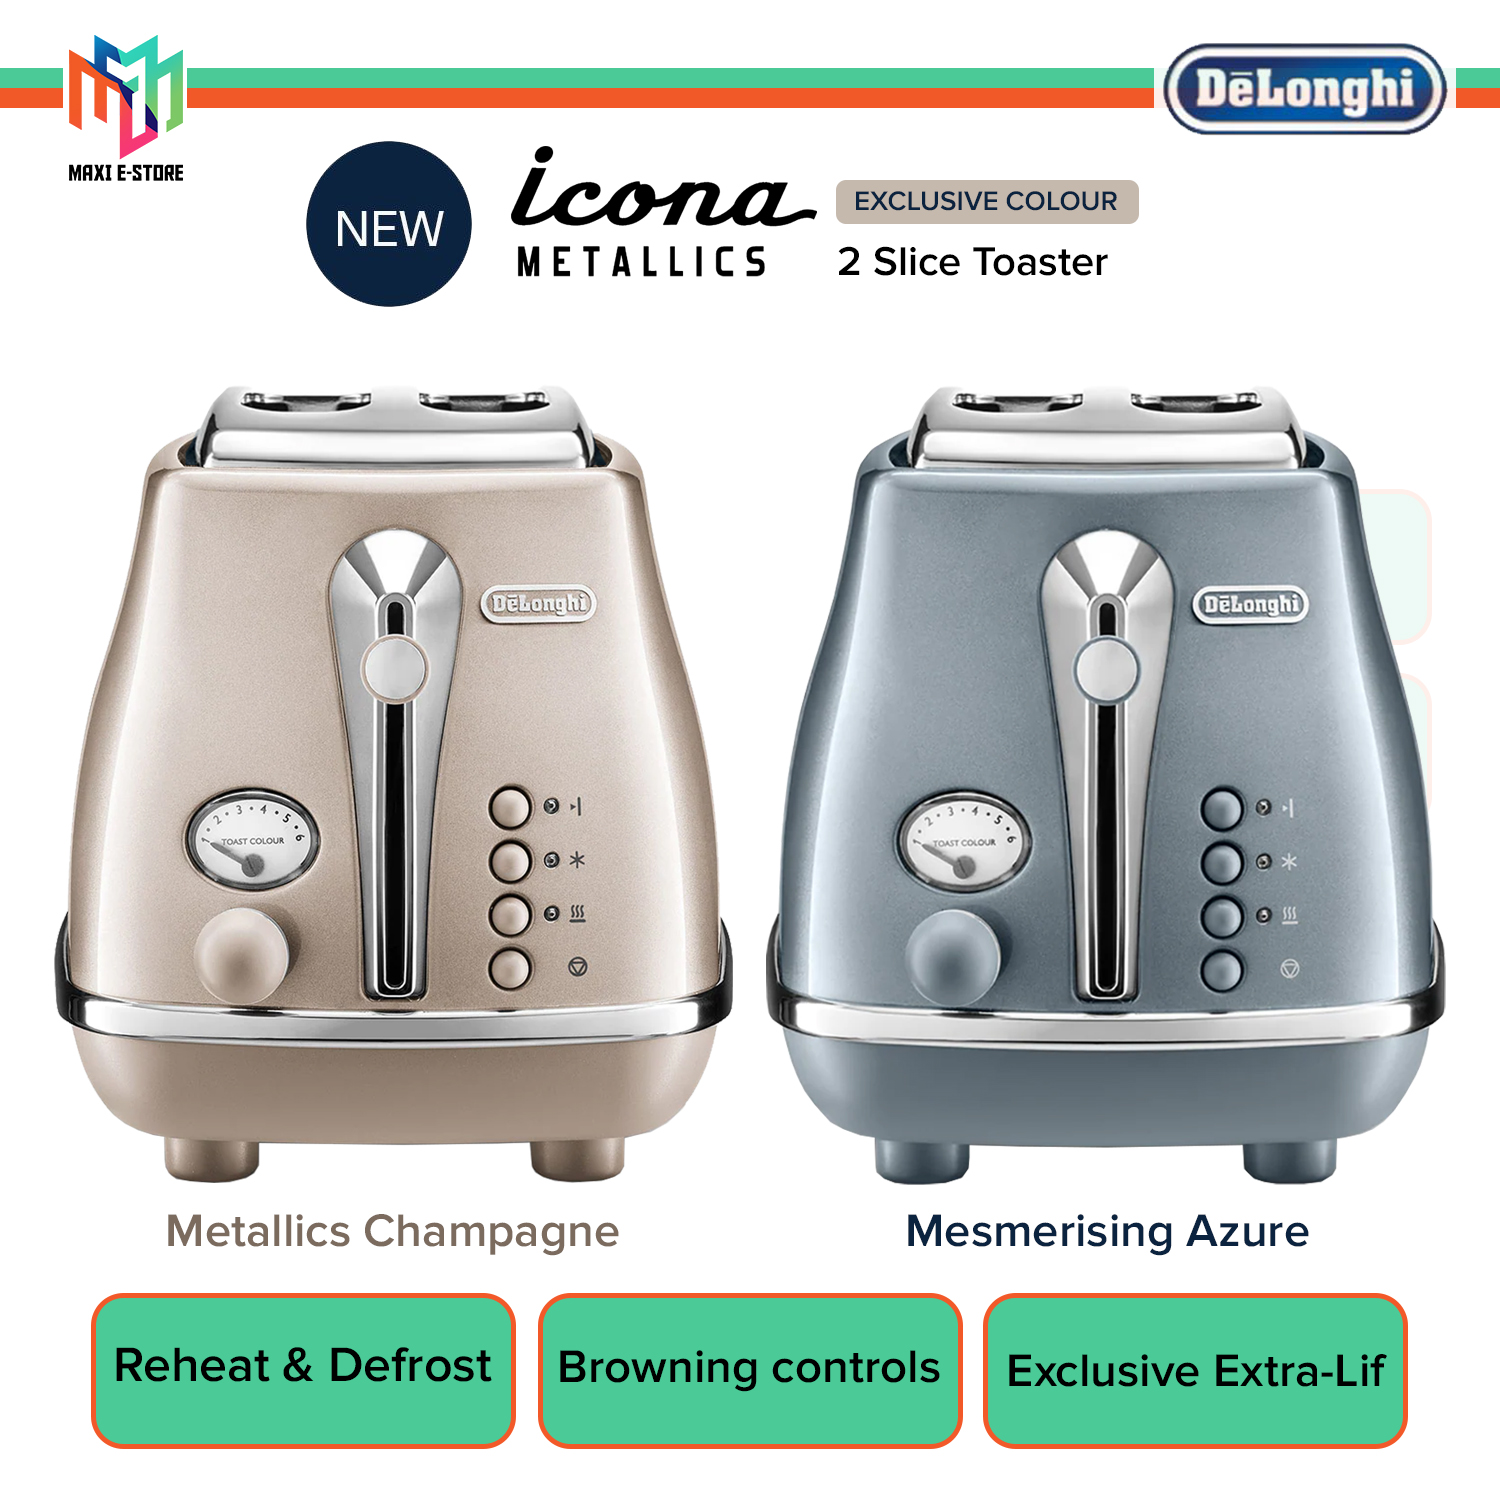 DeLonghi Icona 2-slice Toaster